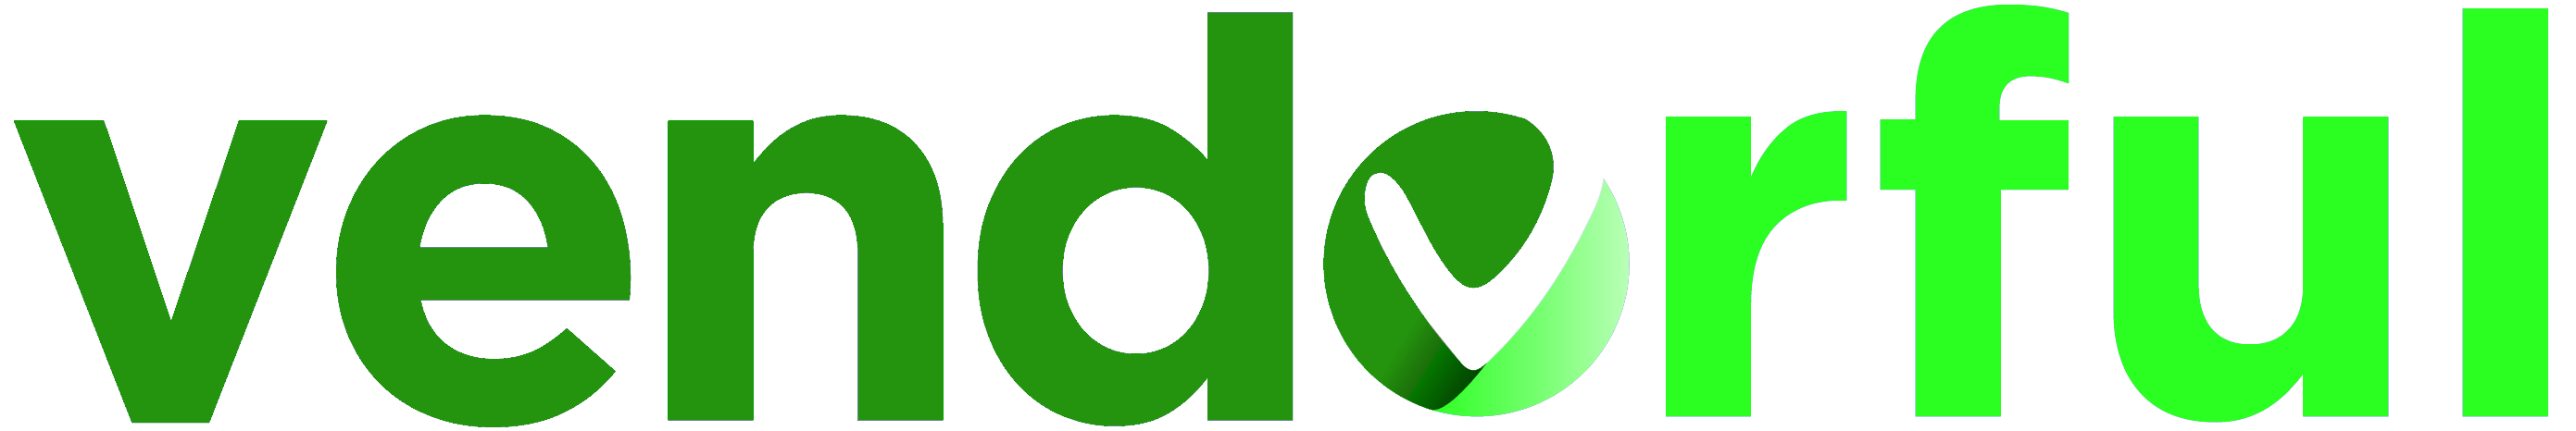 Vendorful Green Logo